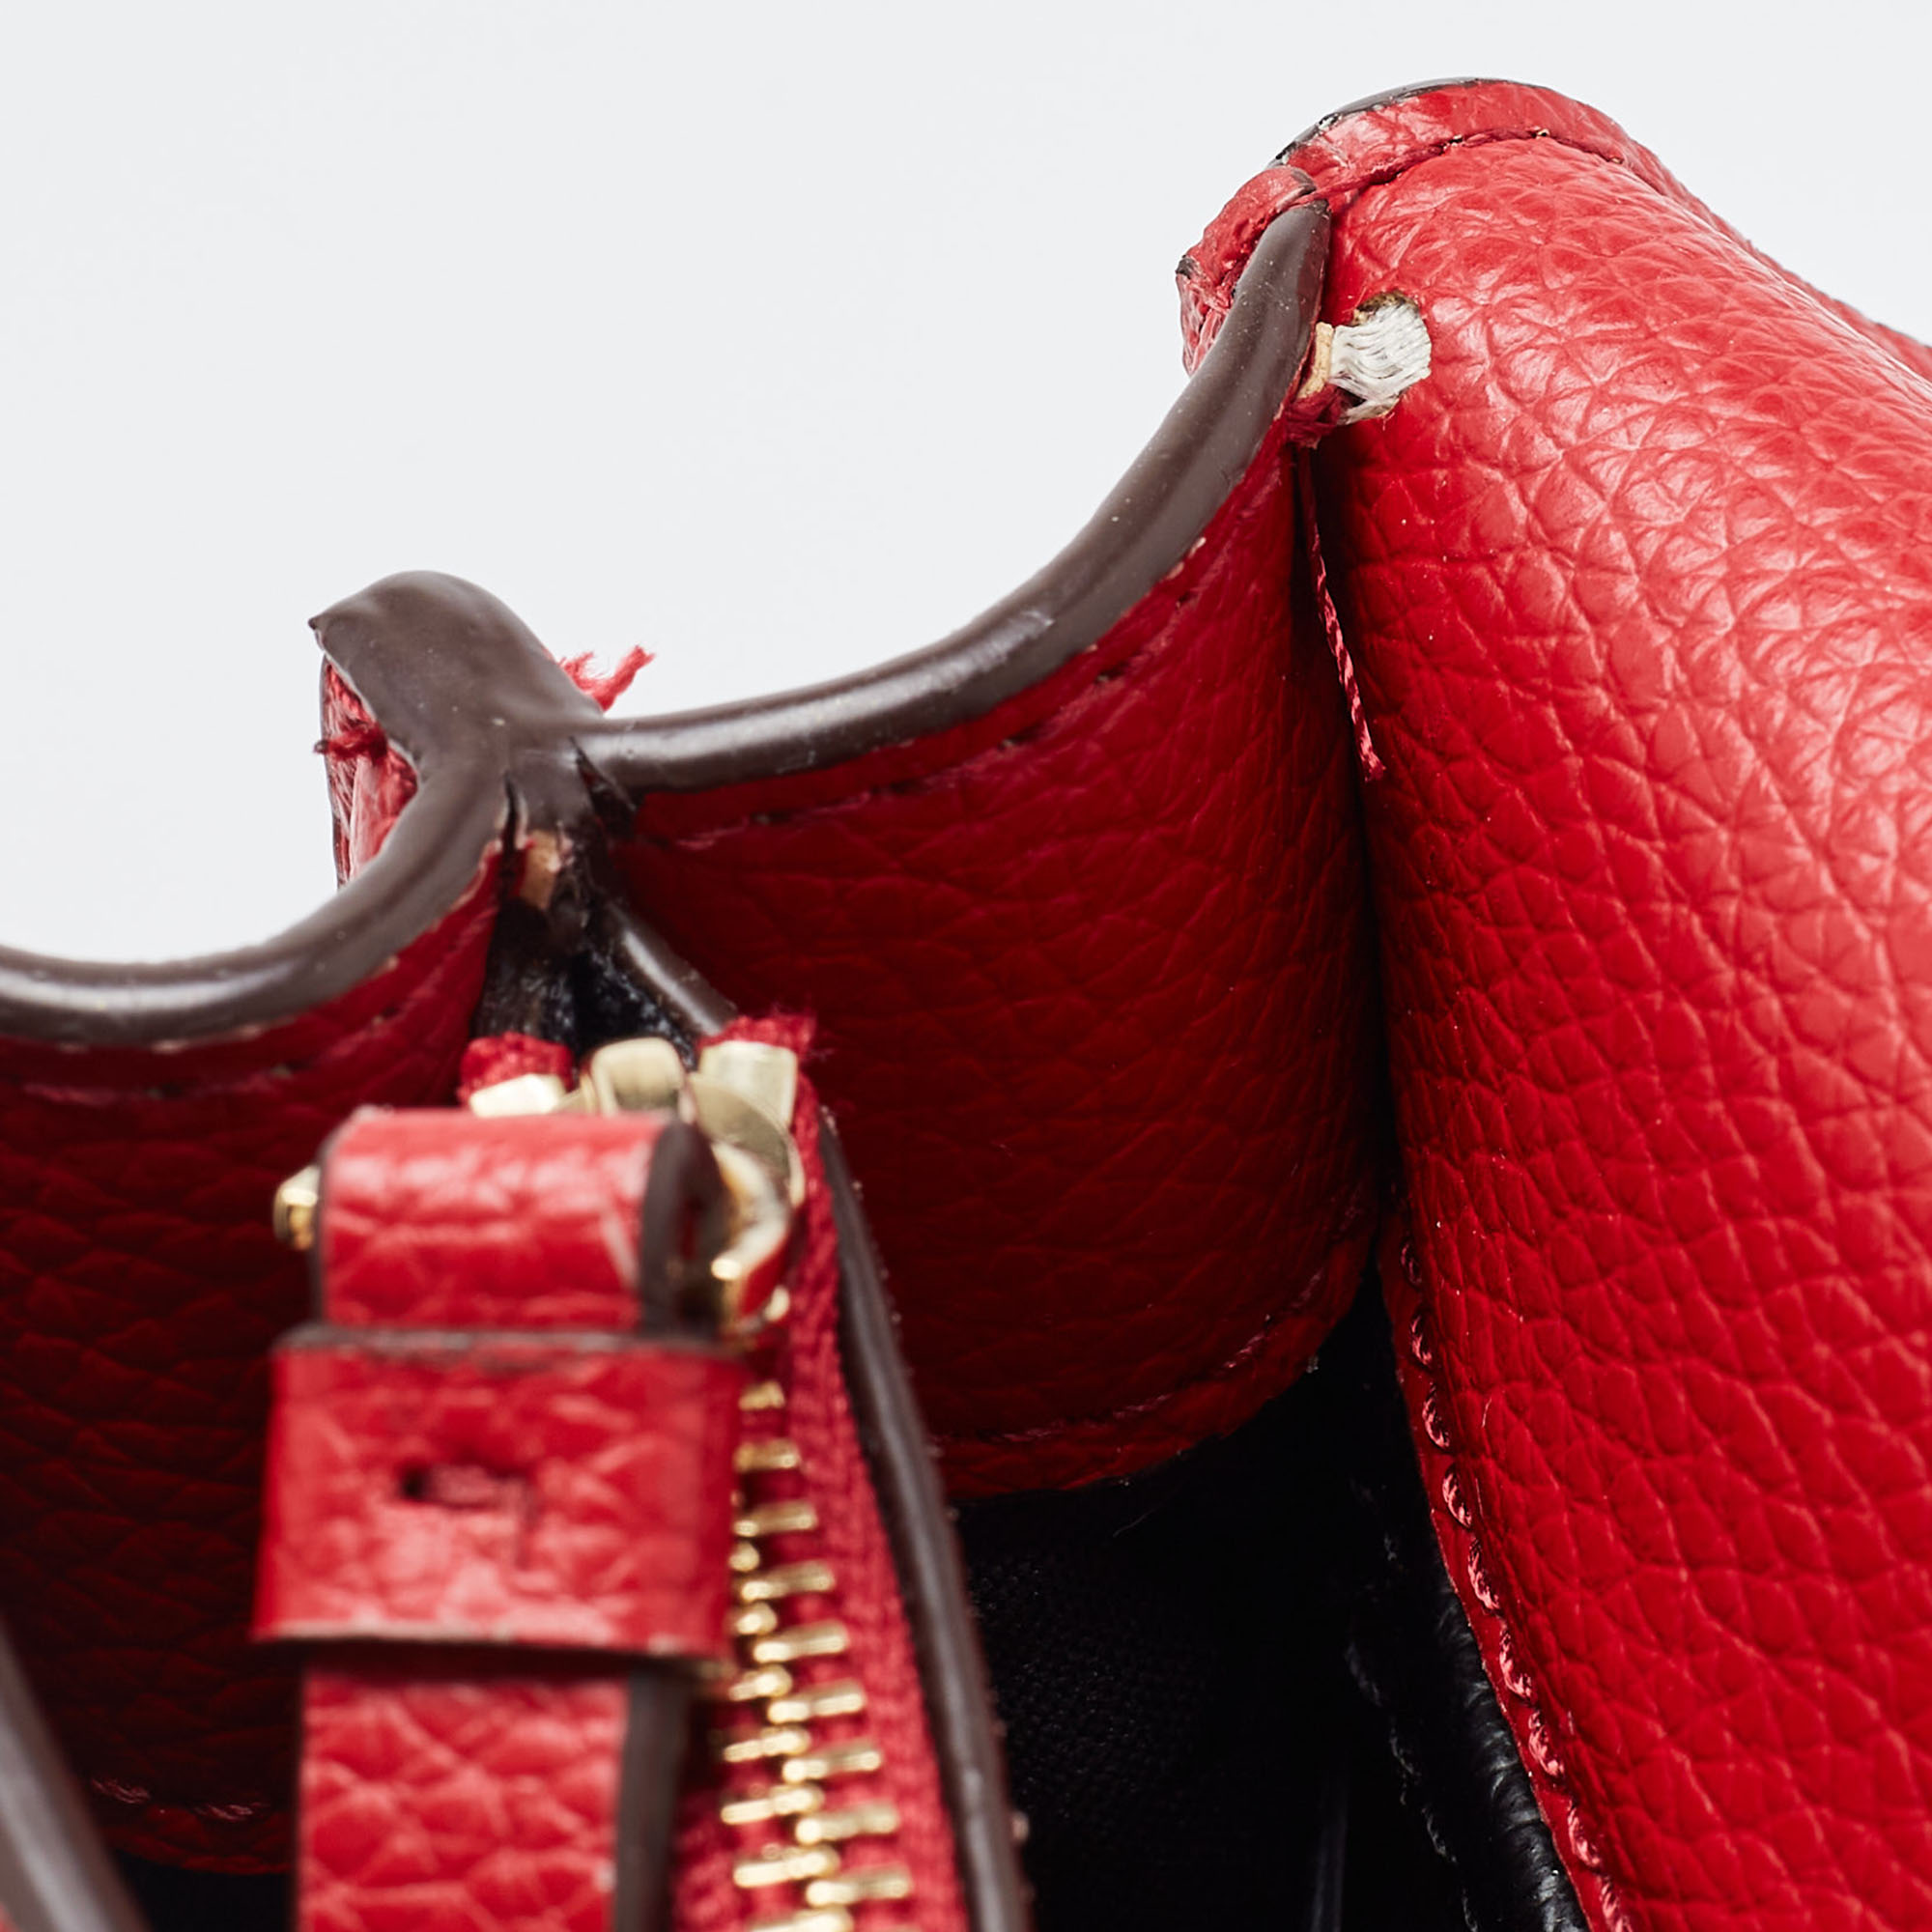 DKNY Red Leather Charm Flap Crossbody Bag